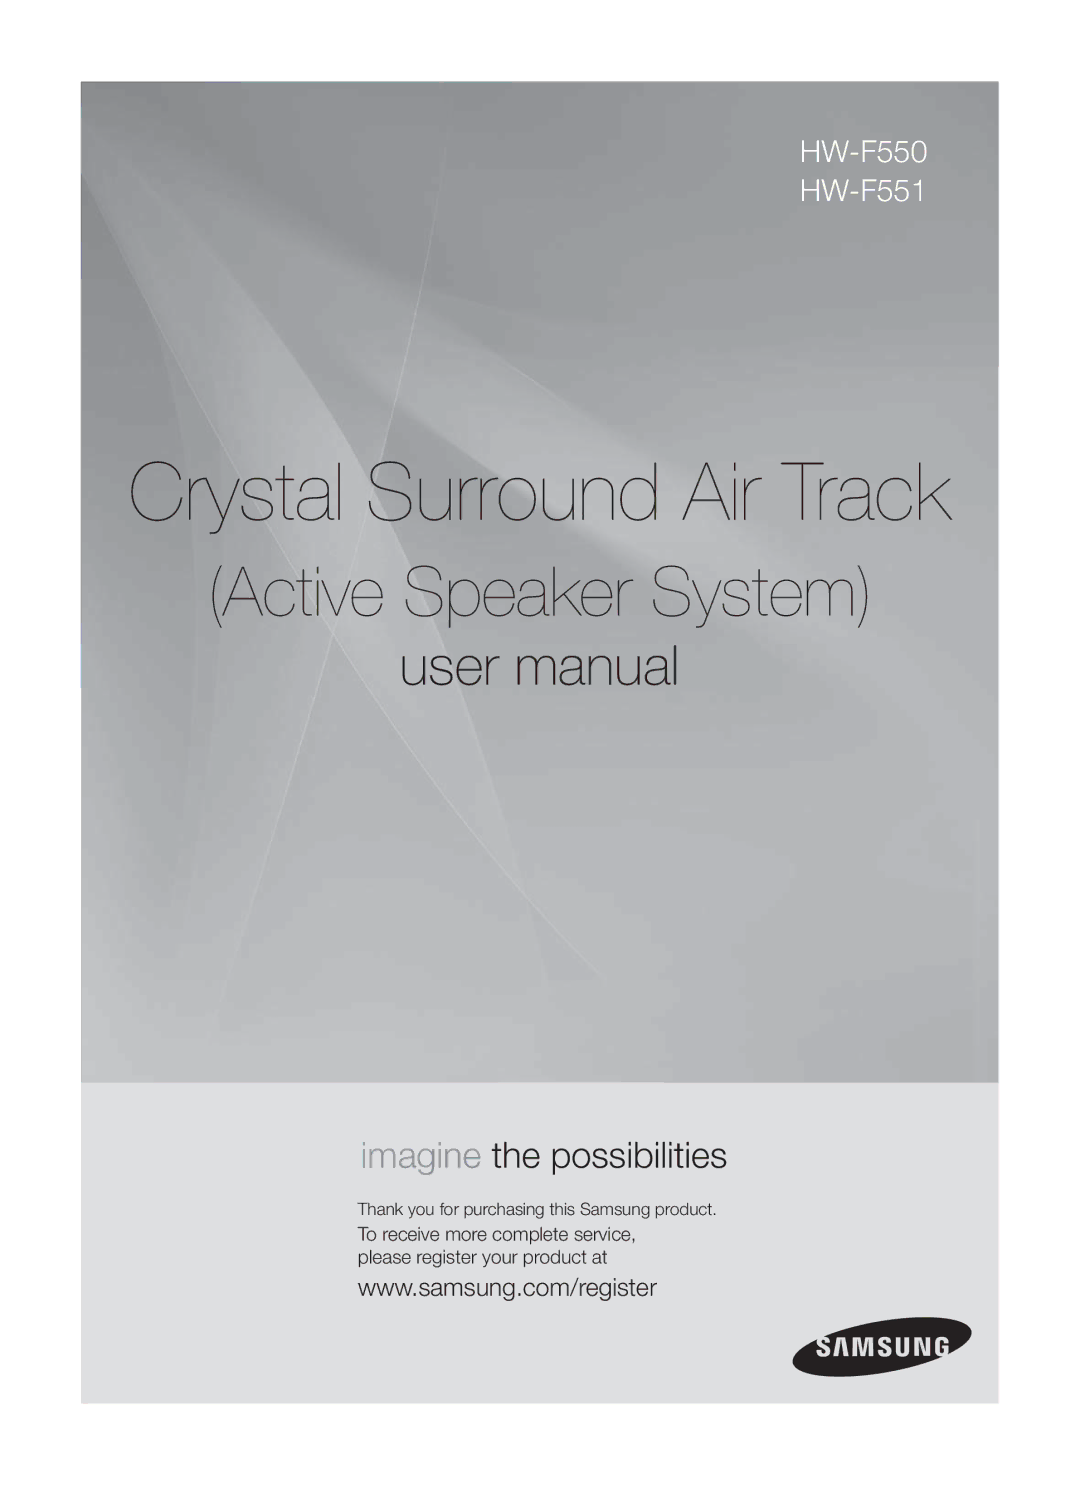 Samsung HW-F551/SQ manual Crystal Surround Air Track 